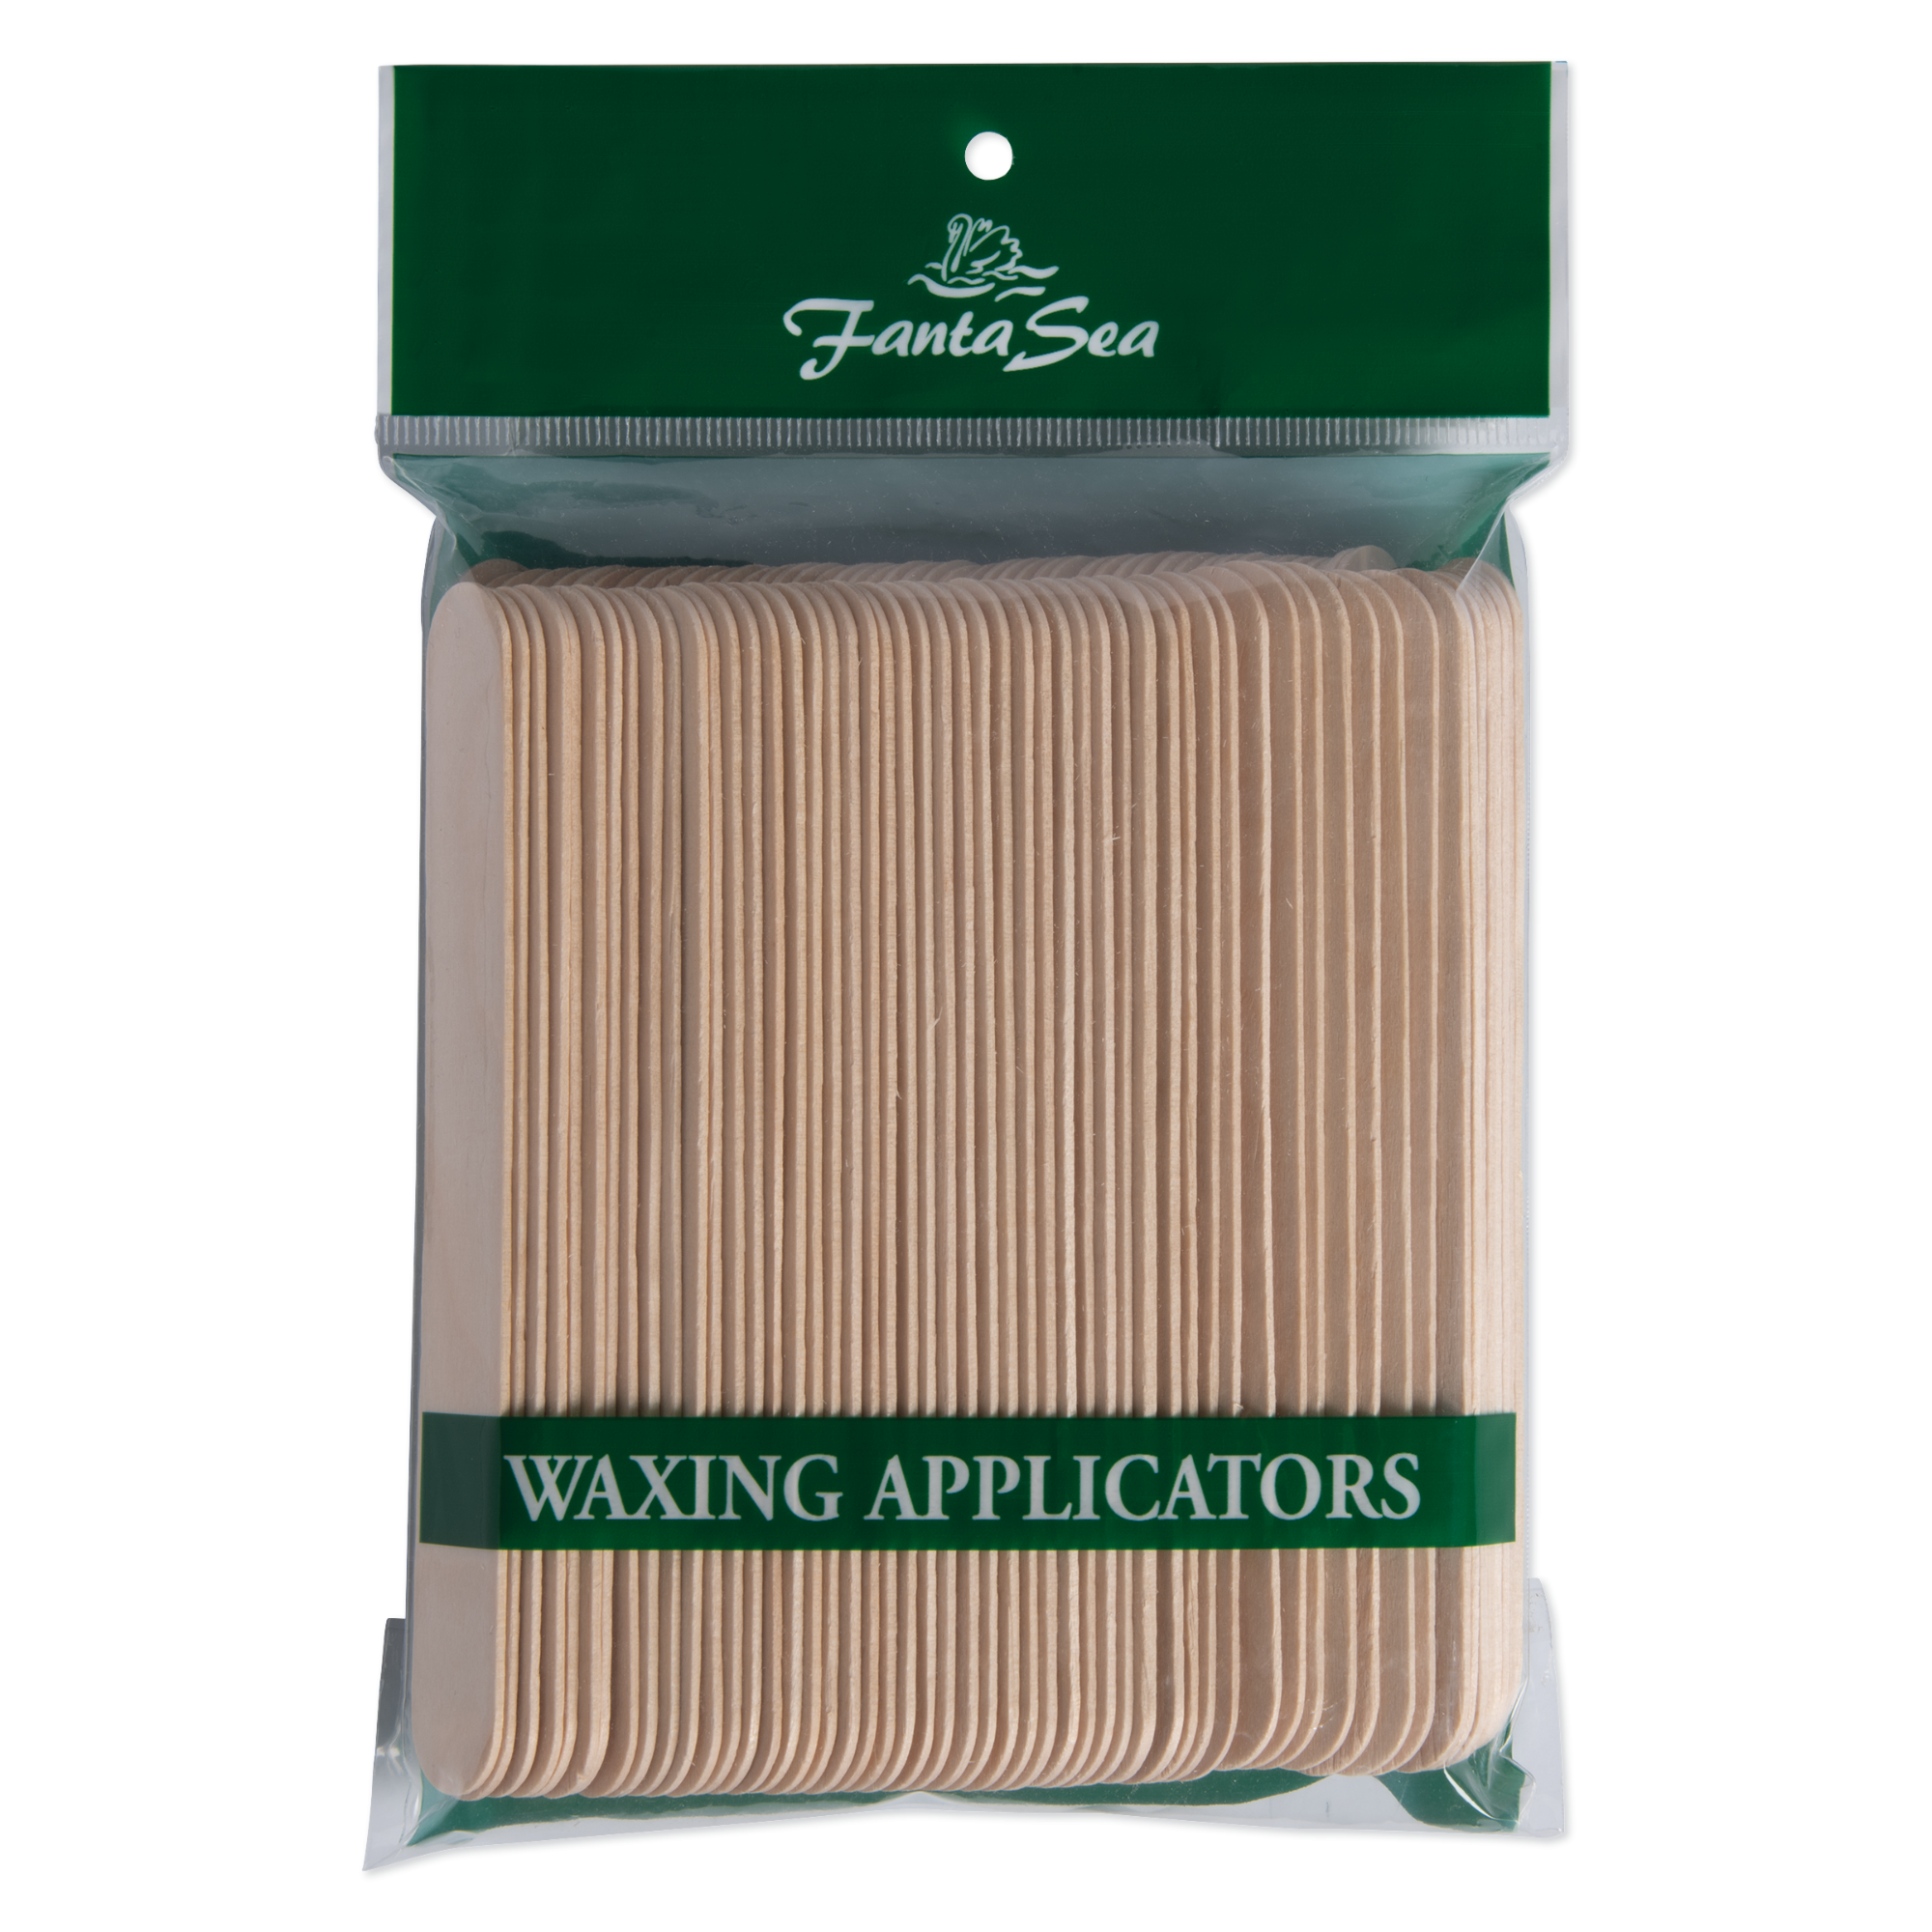 FantaSea Waxing Applicators 100 pc - Lynamy Beauty Supply